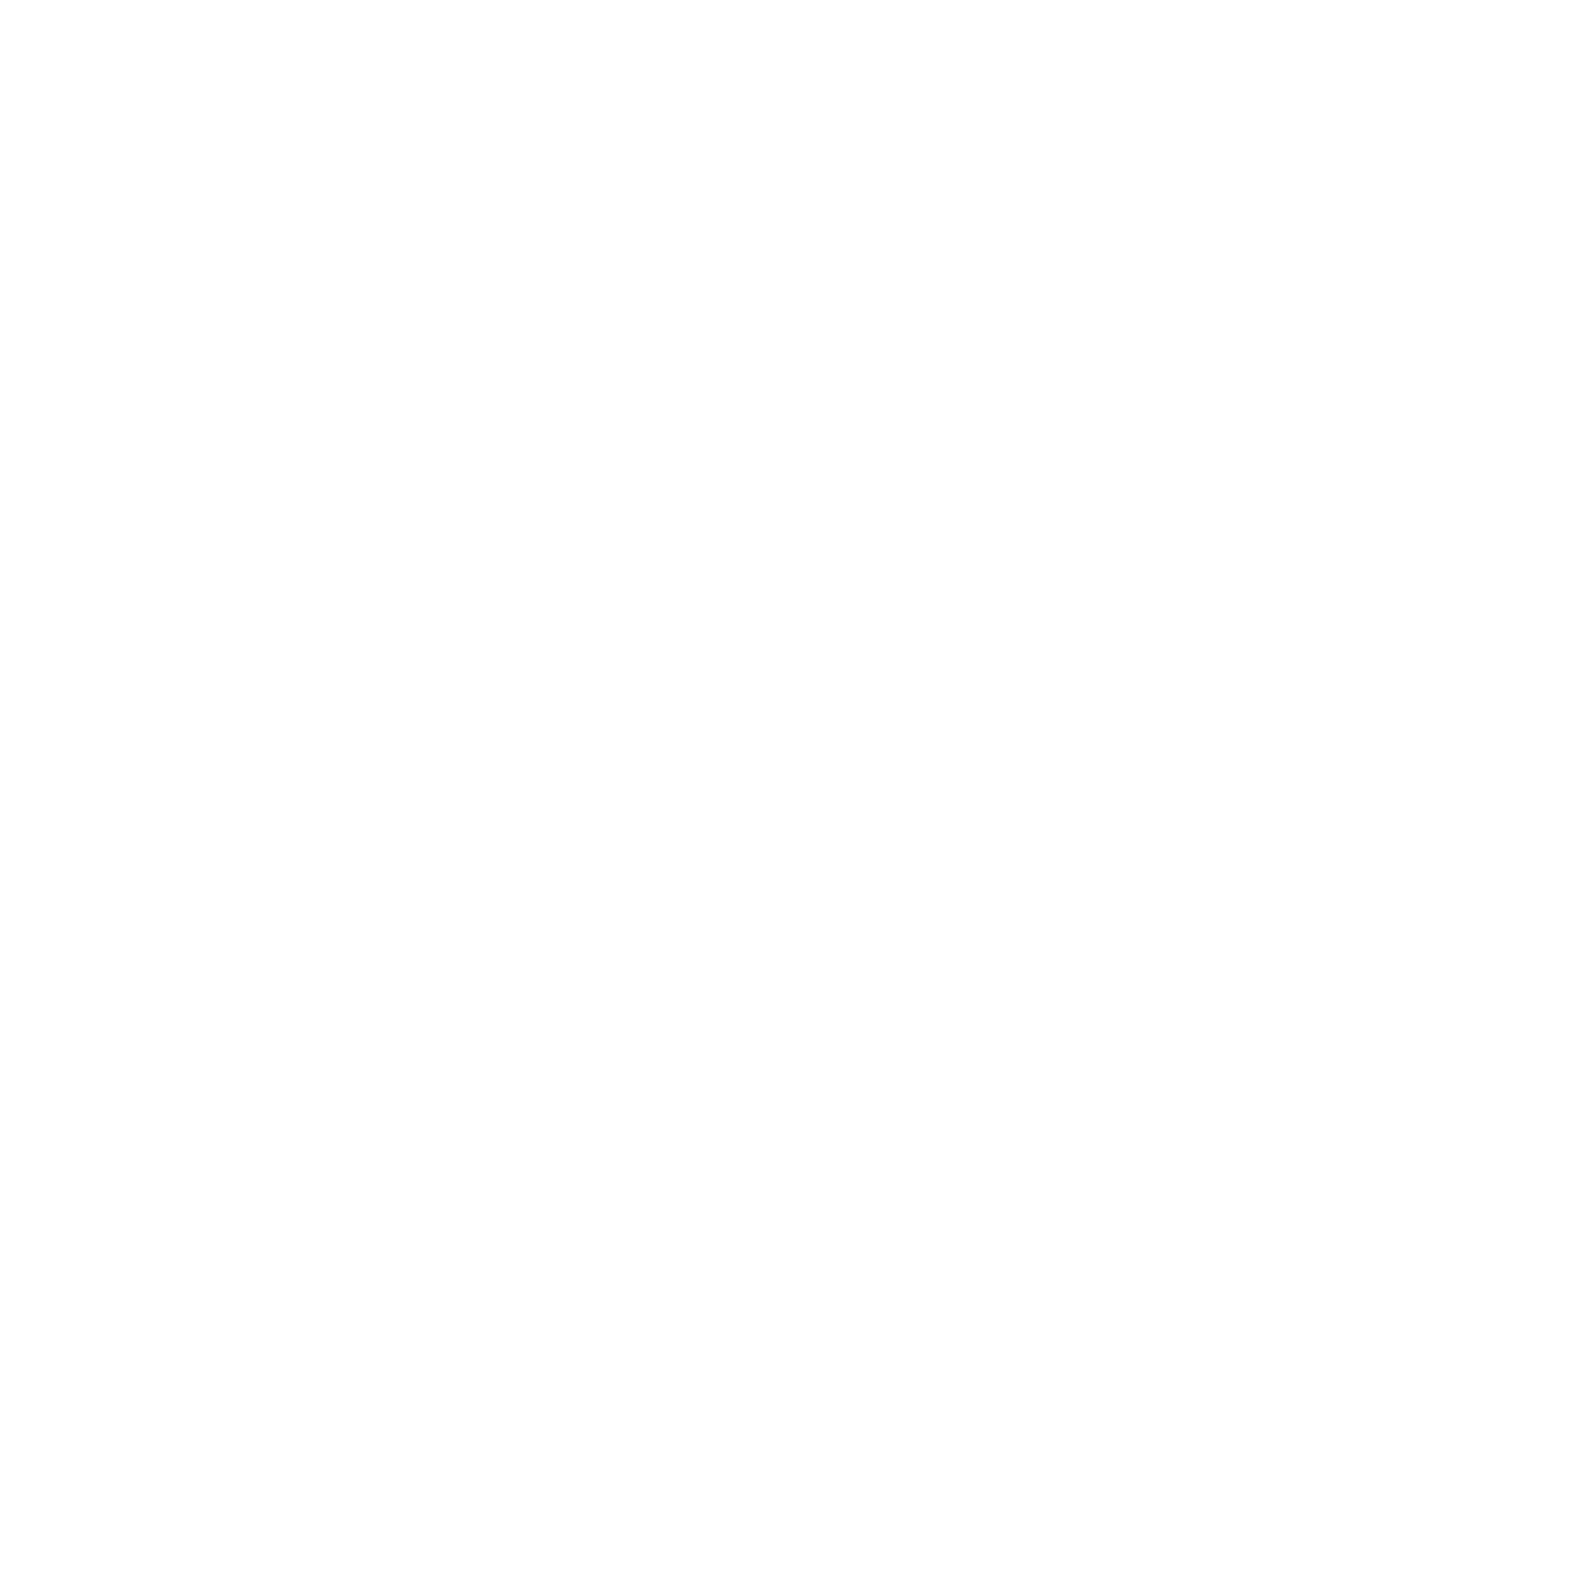 AXS logo for dark backgrounds (transparent PNG)